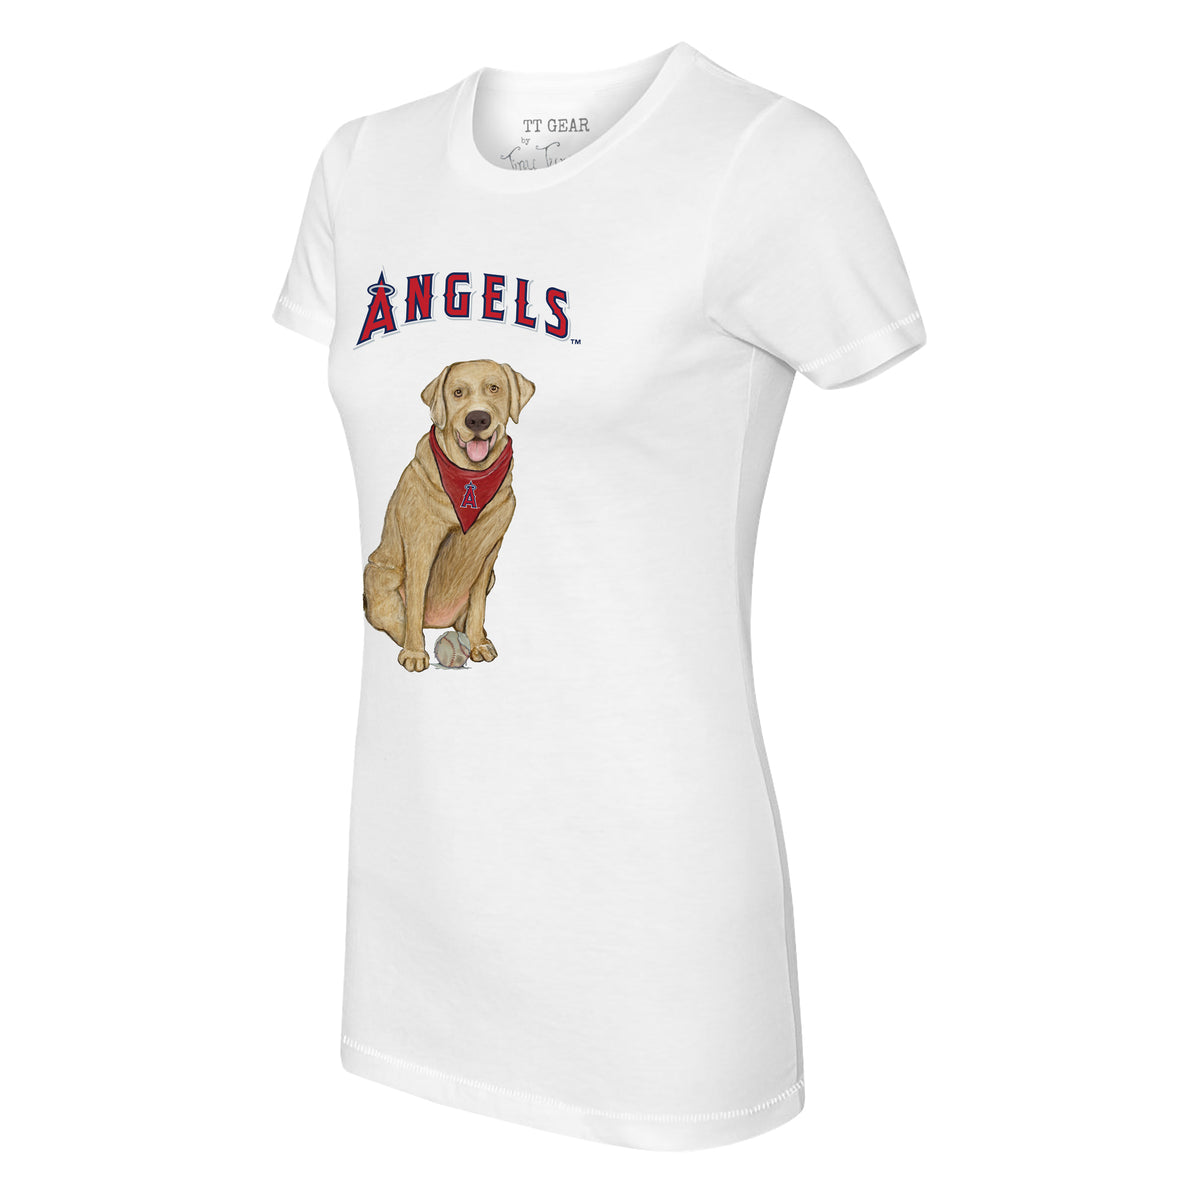 Los Angeles Angels Yellow Labrador Retriever Tee Shirt